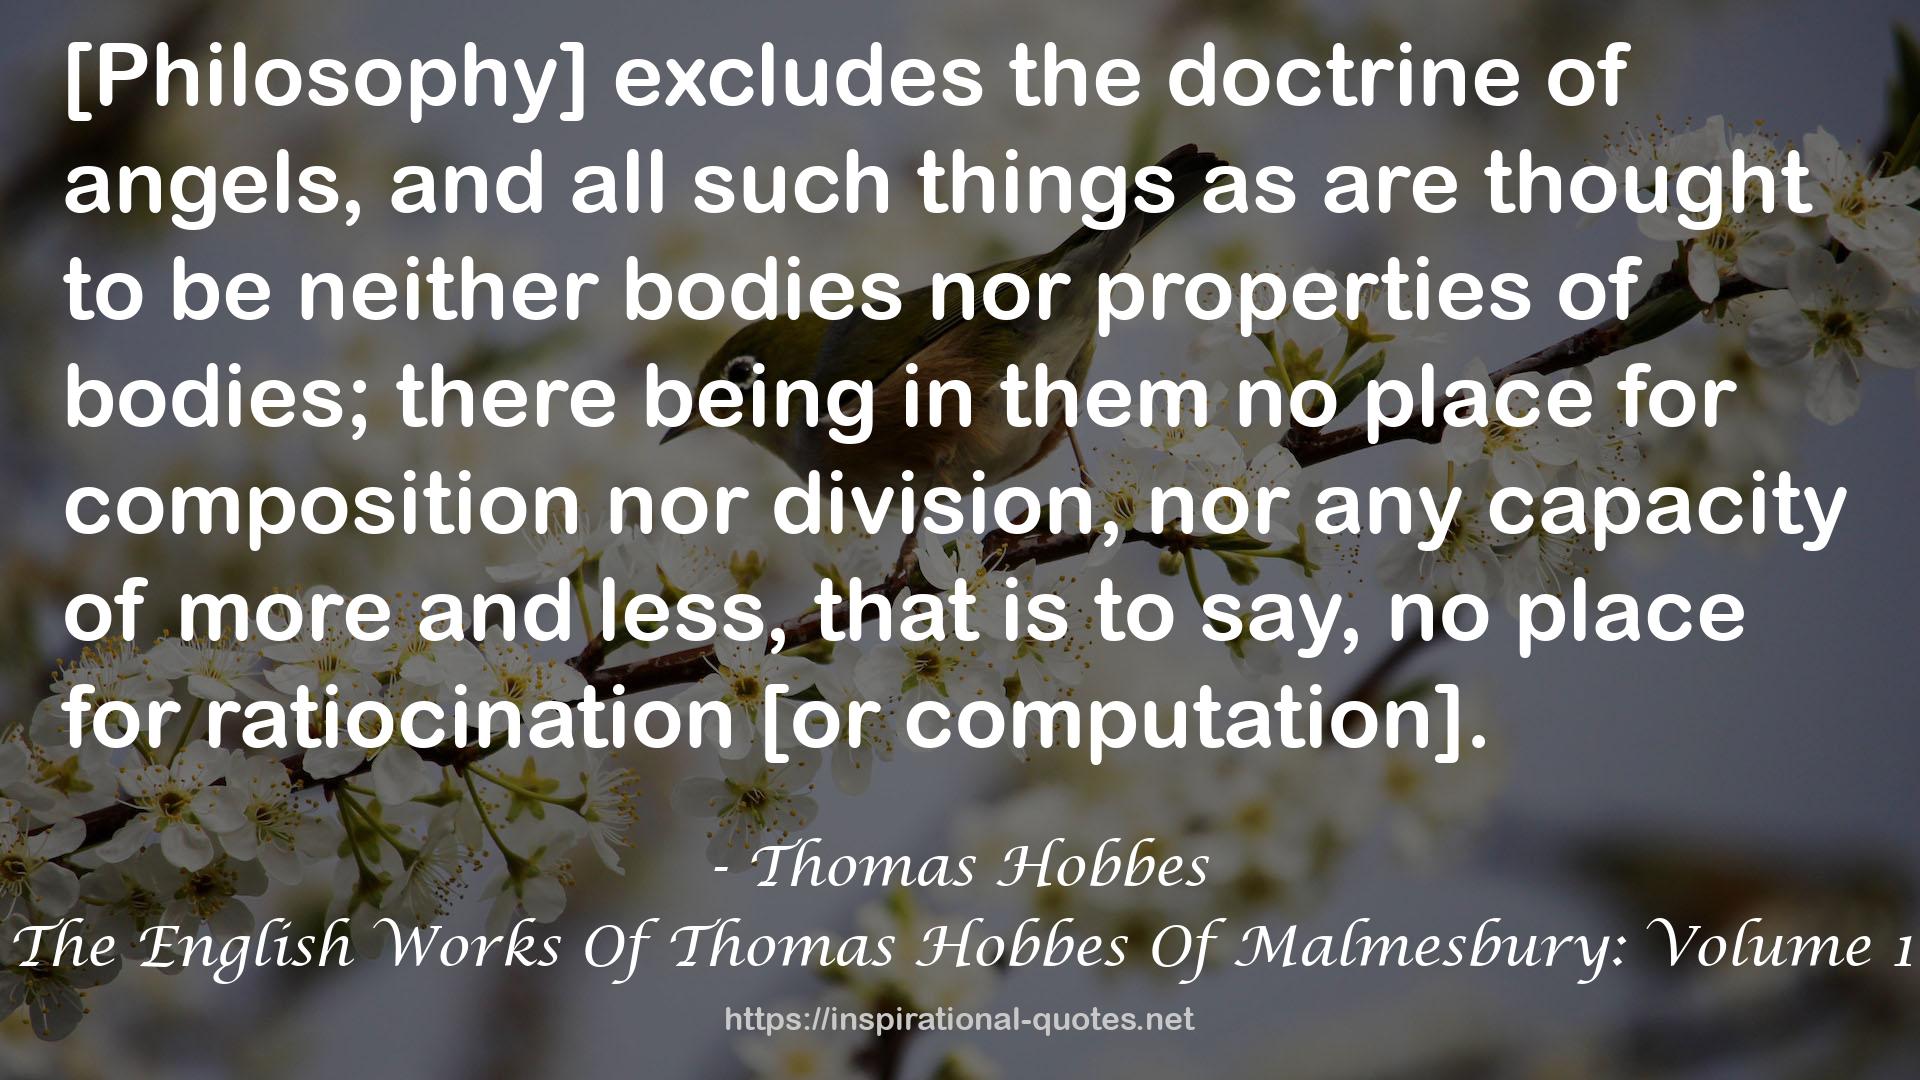 The English Works Of Thomas Hobbes Of Malmesbury: Volume 1 QUOTES